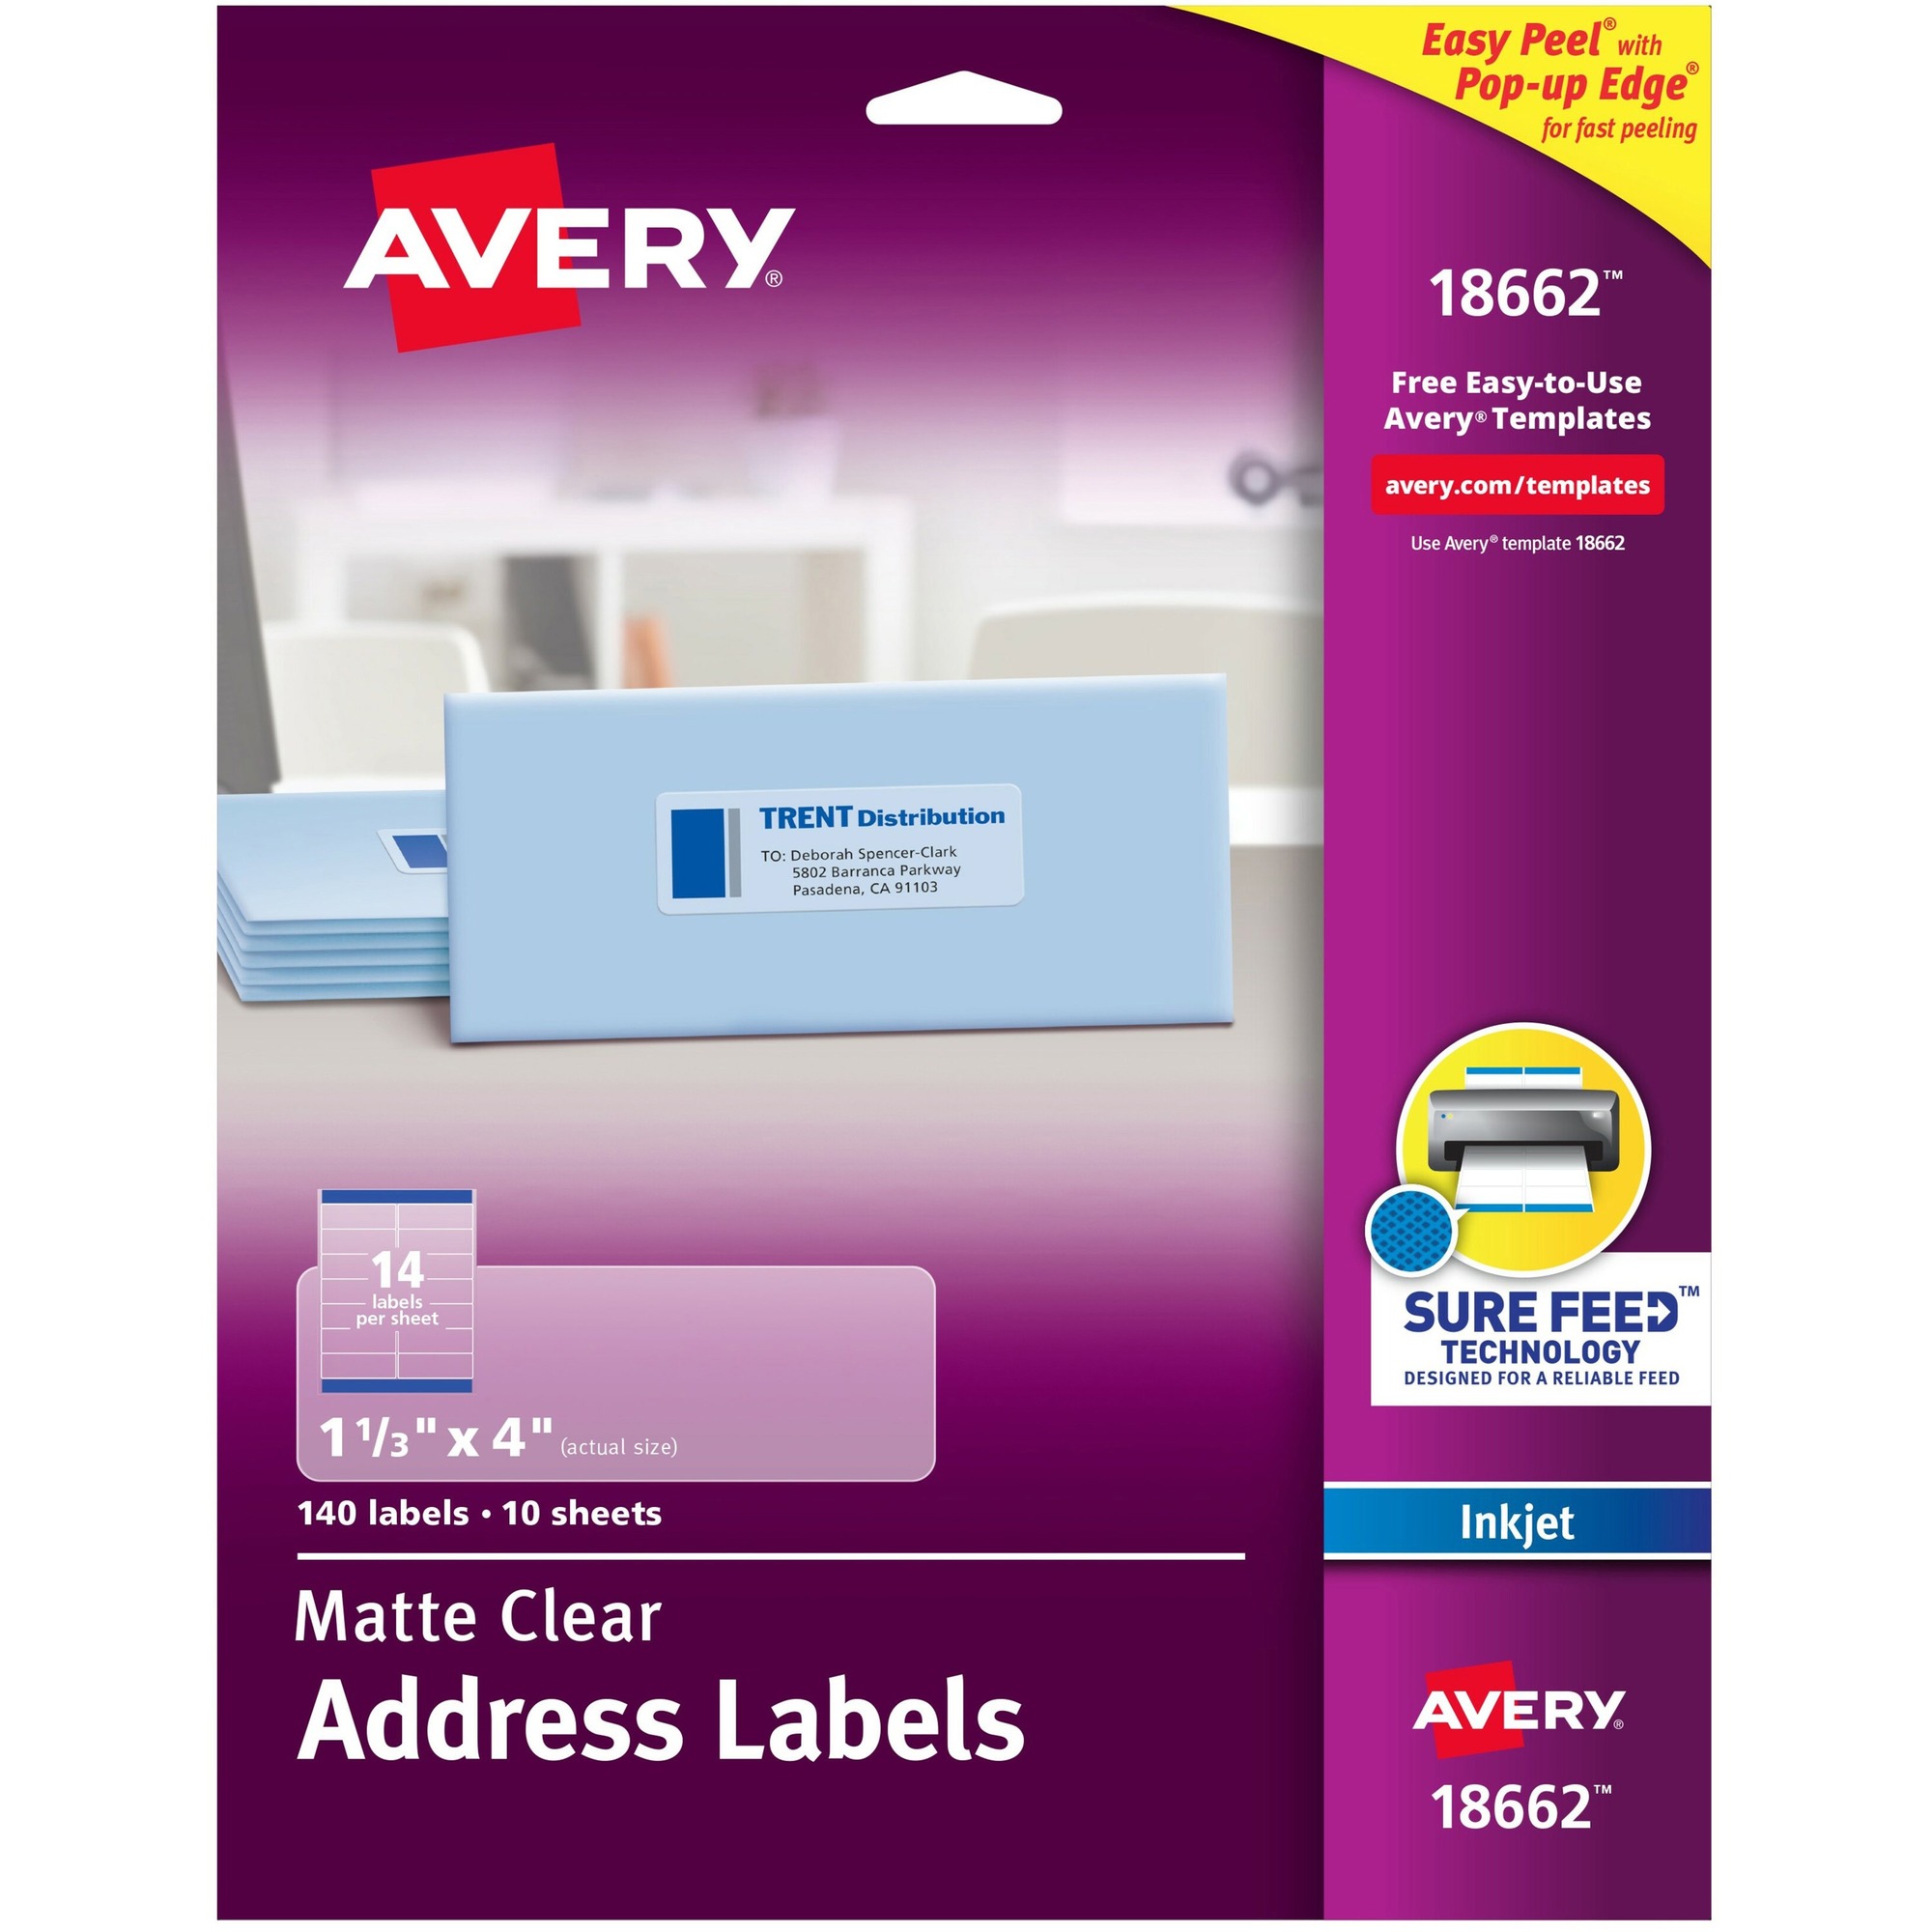 34-avery-8161-label-template-label-design-ideas-2020